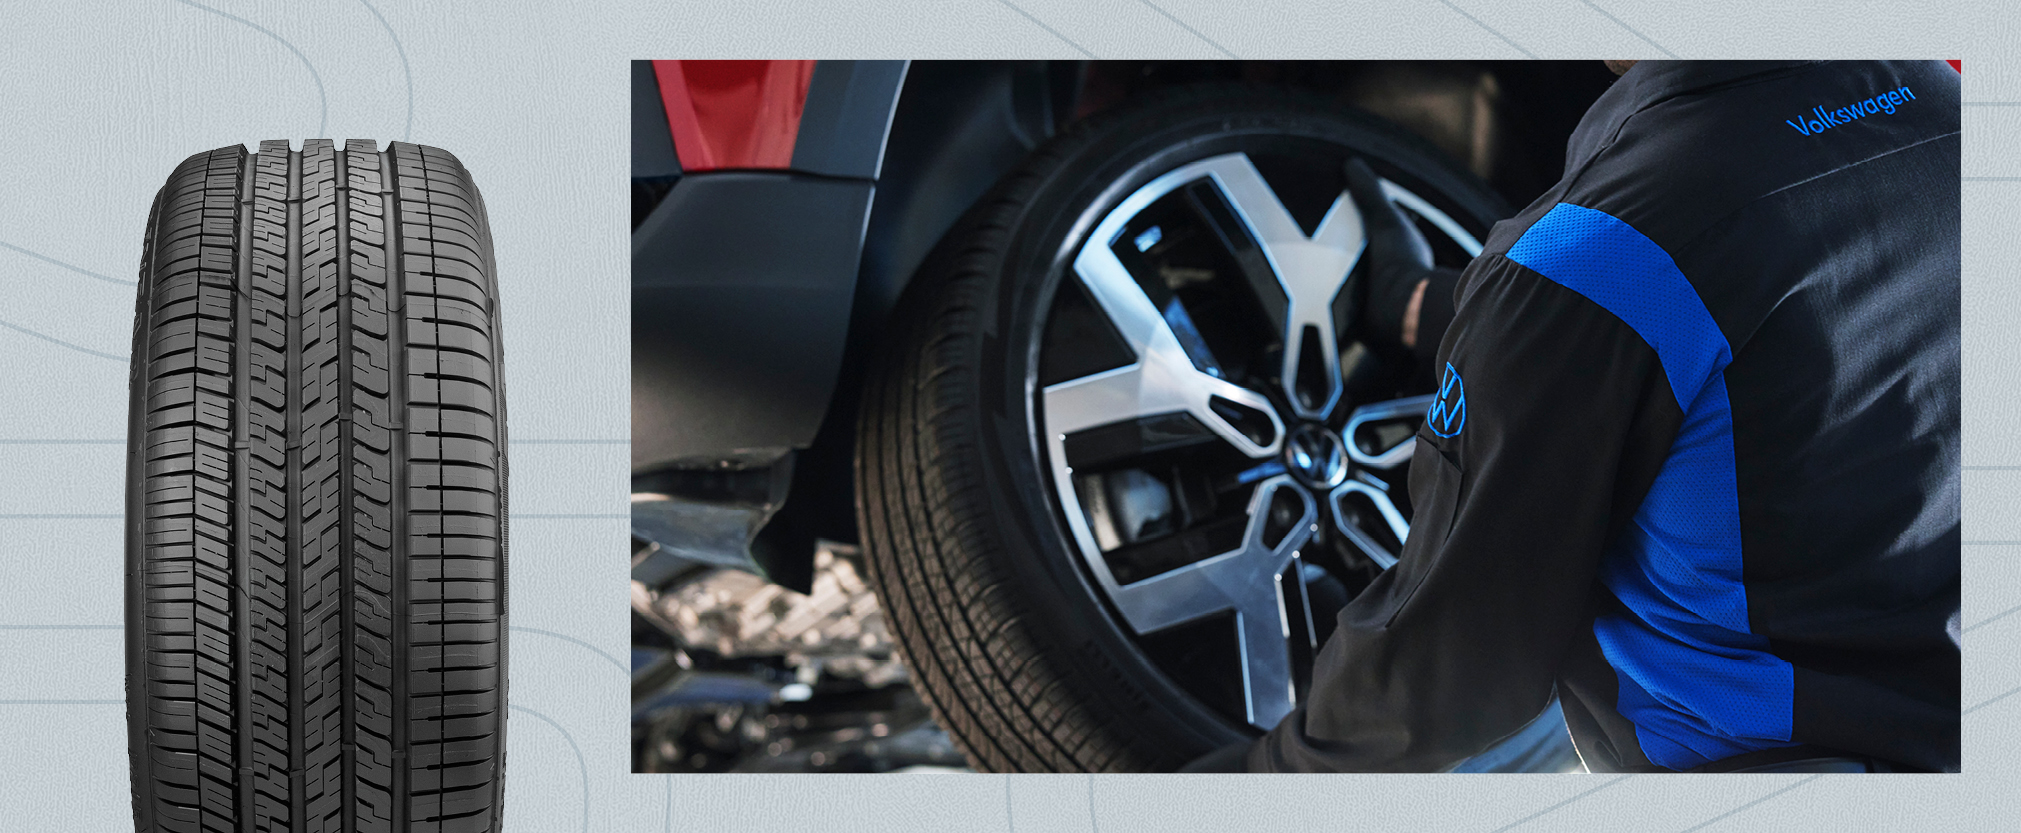 Volkswagen Tire Store Price Match Guarantee 